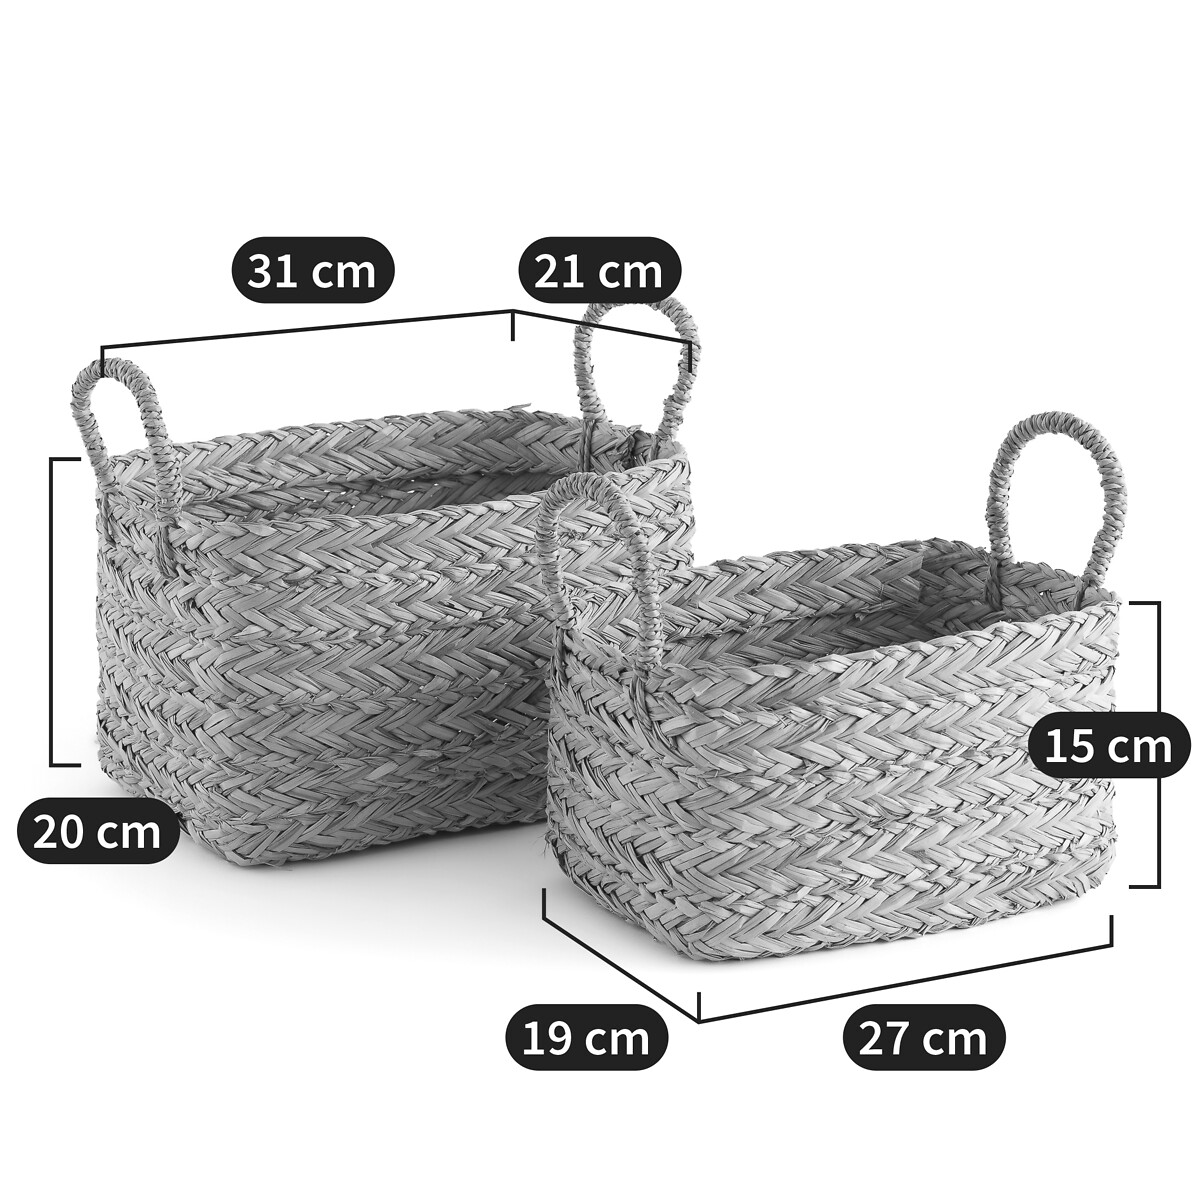 Spacio narrow woven straw laundry basket, natural, La Redoute